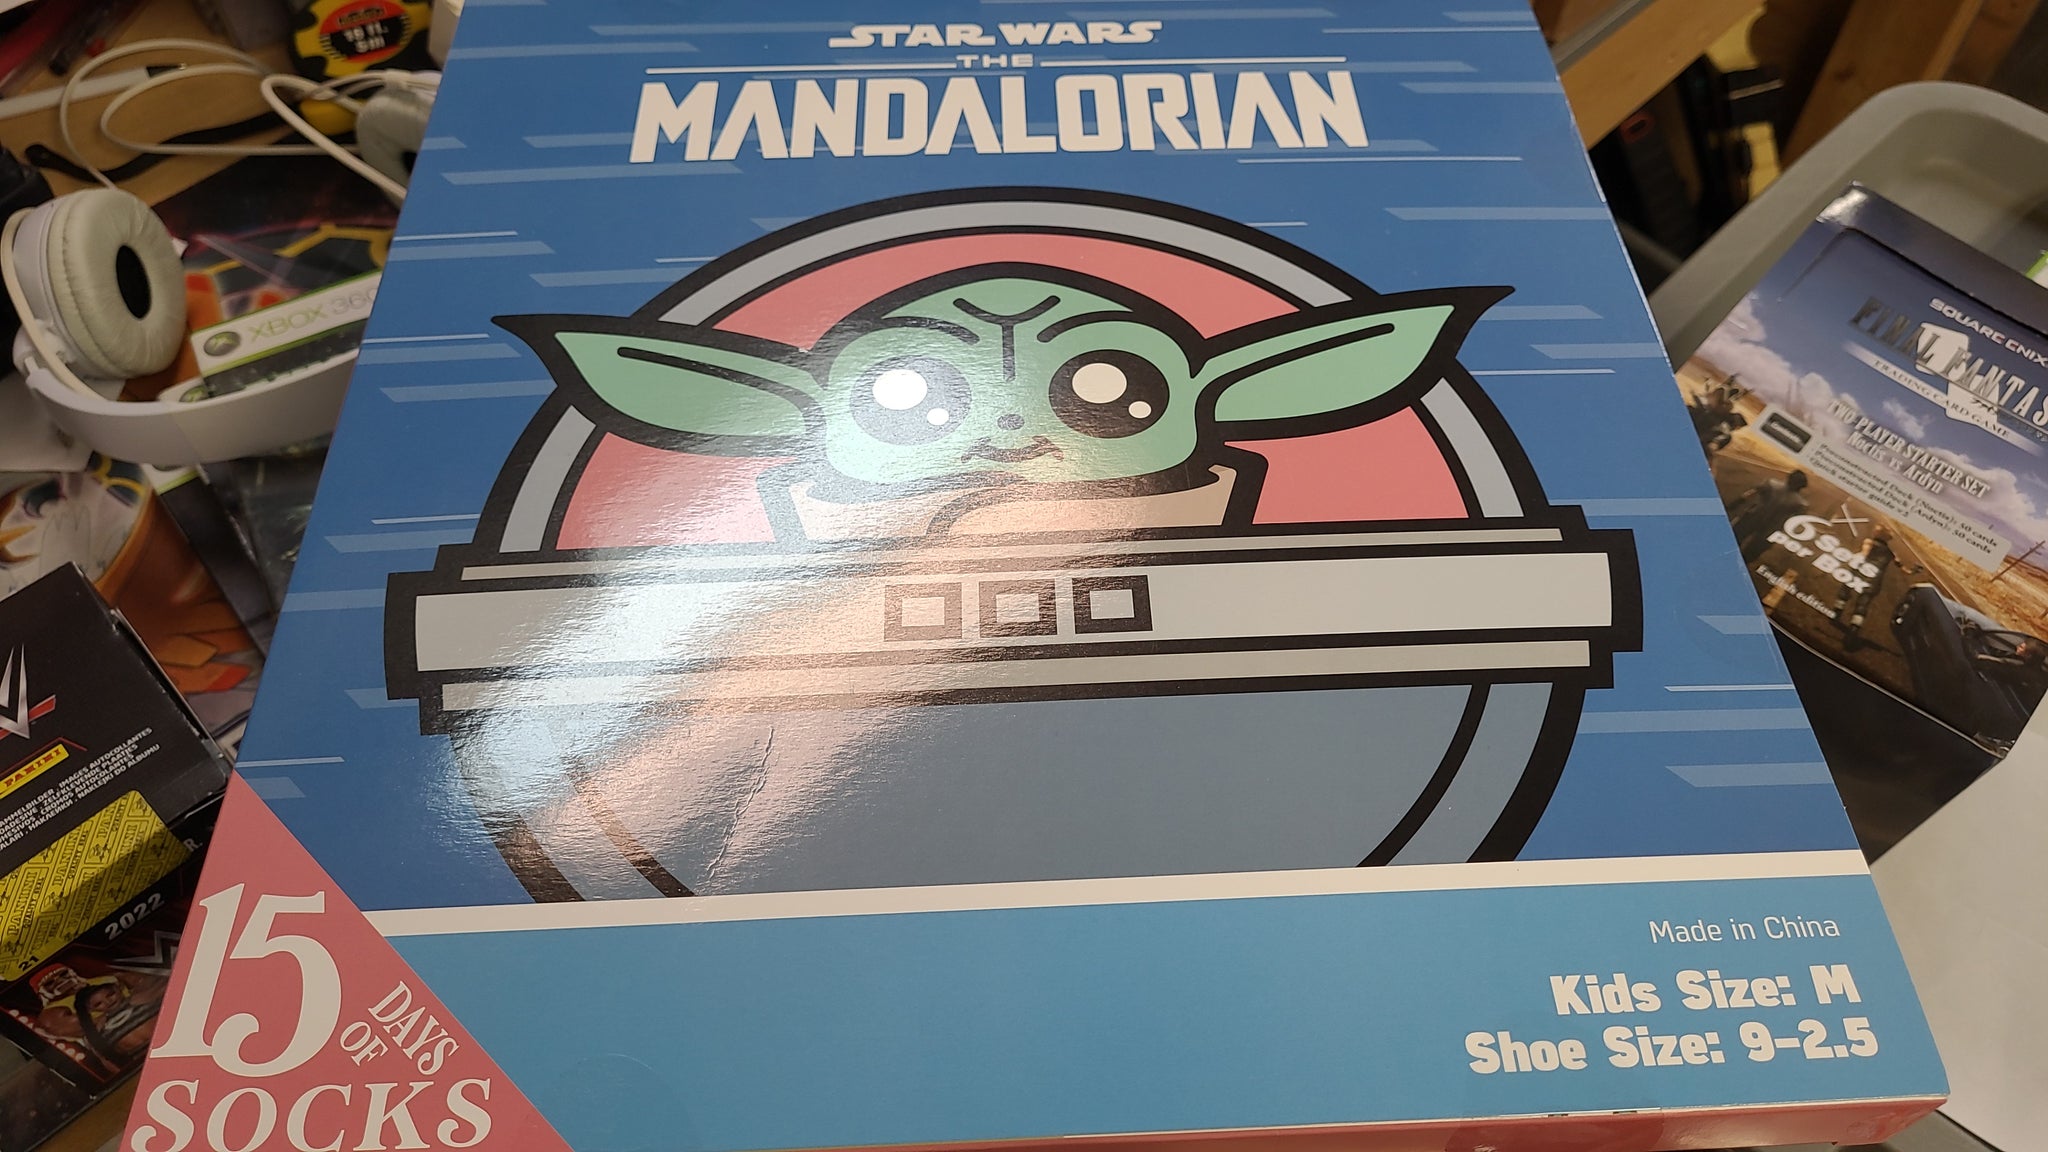 Star Wars: The Mandalorian - 15 days of Socks (Size M)